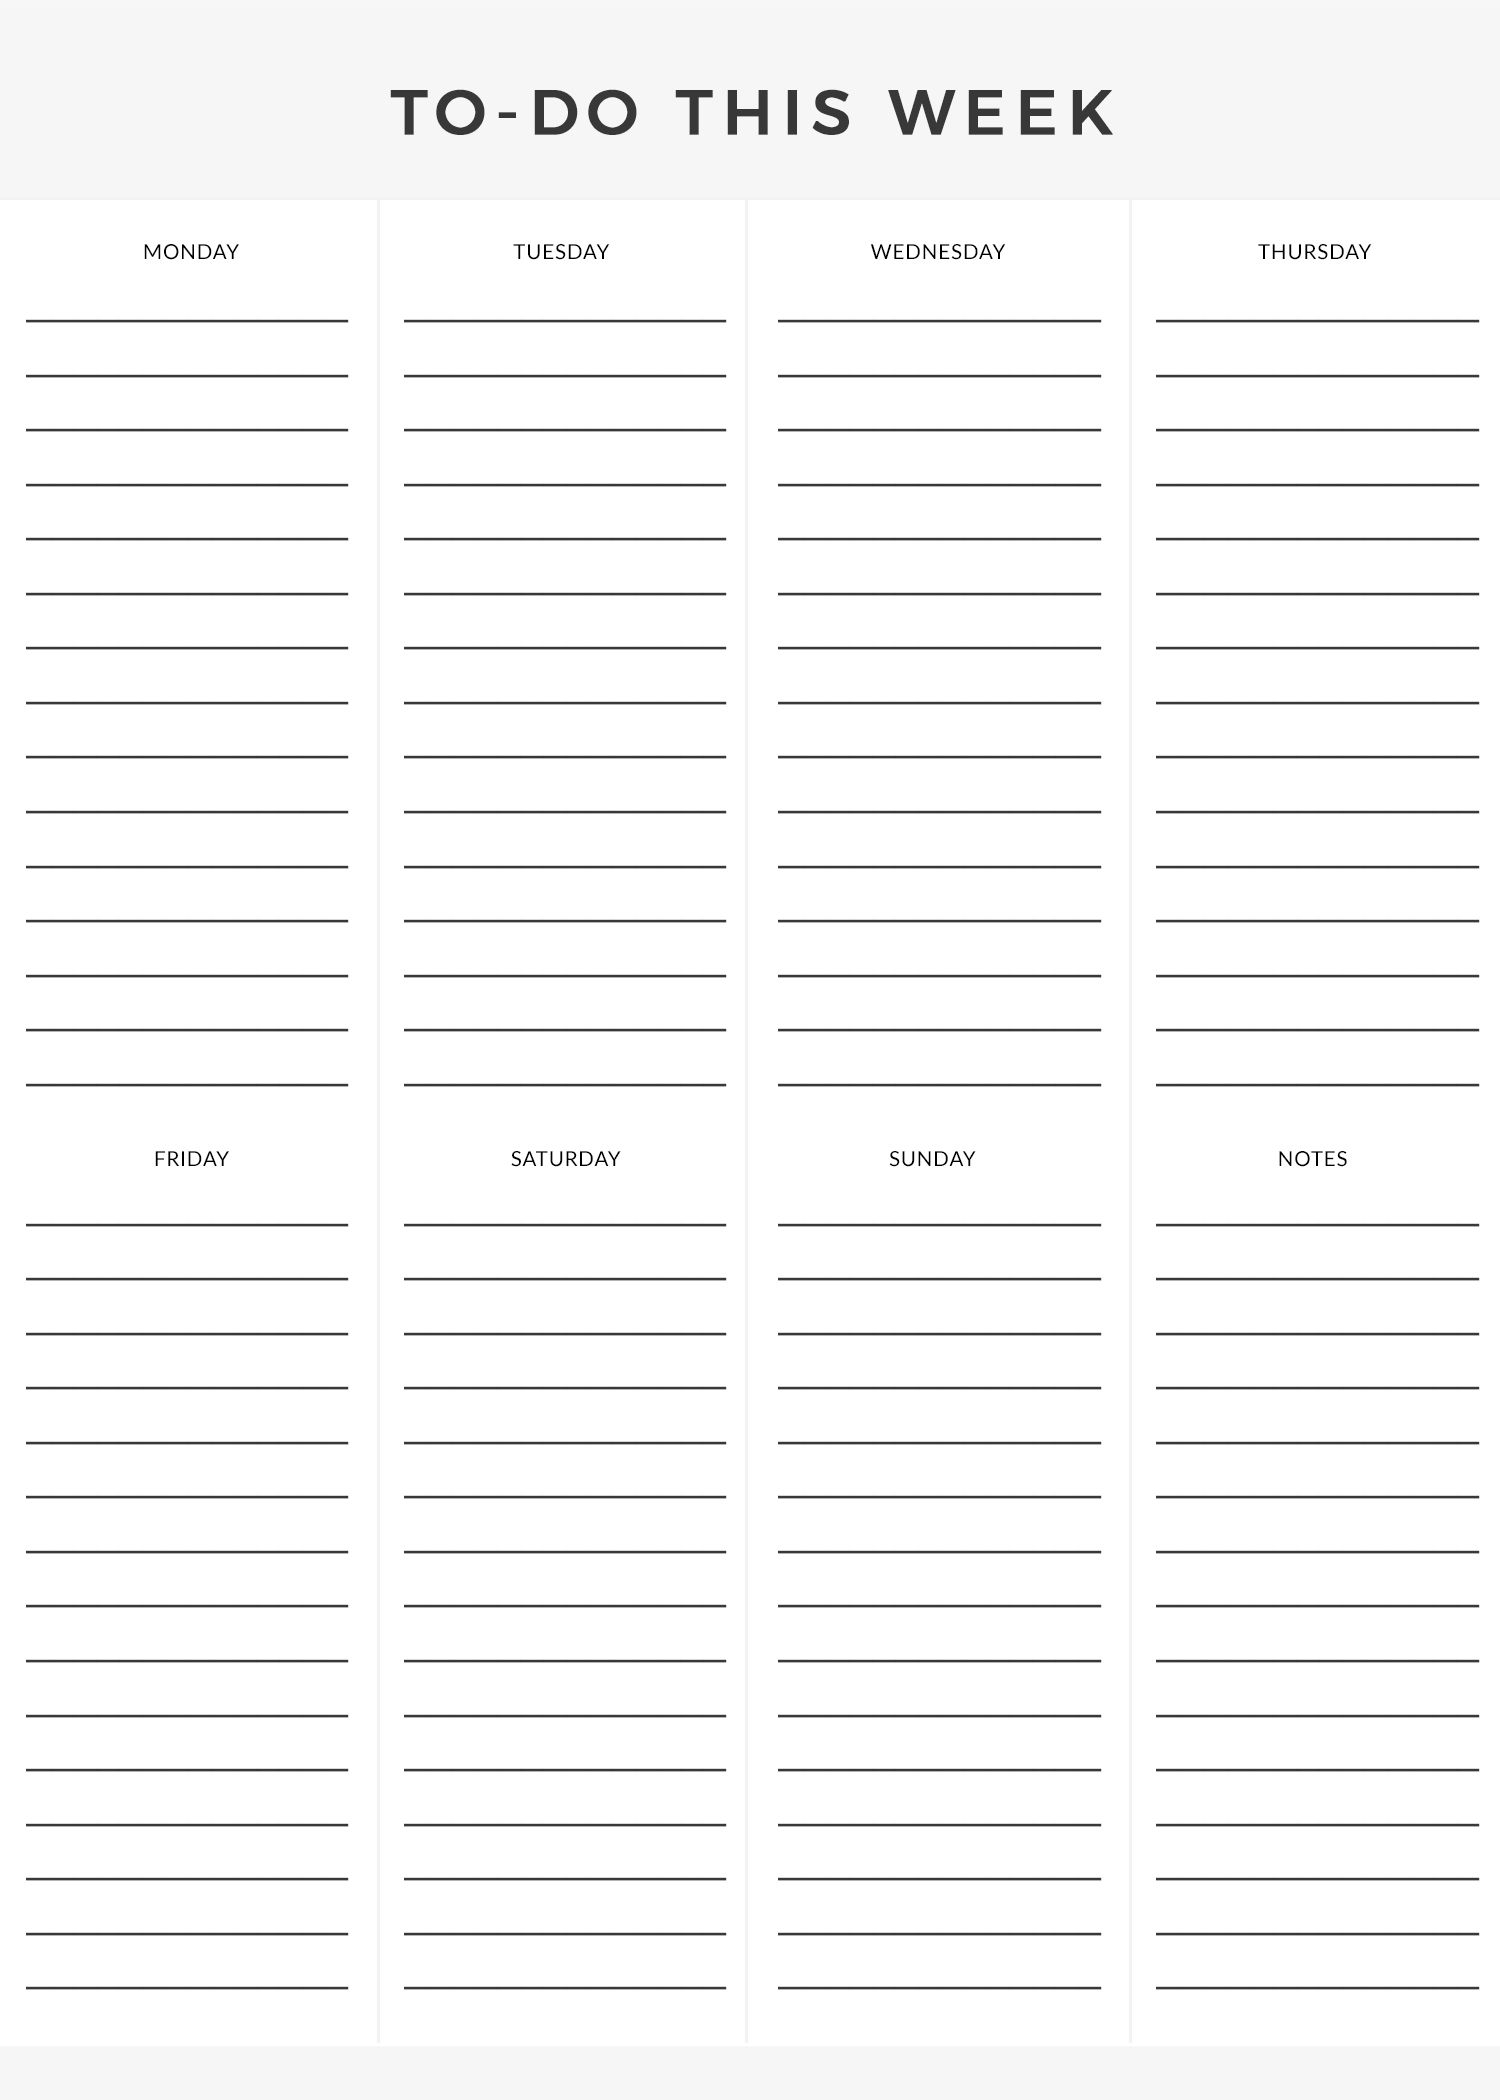 Free Printable Weekly To-Do List | To Do Lists Printable with Monday Through Friday Checklist Free Printable